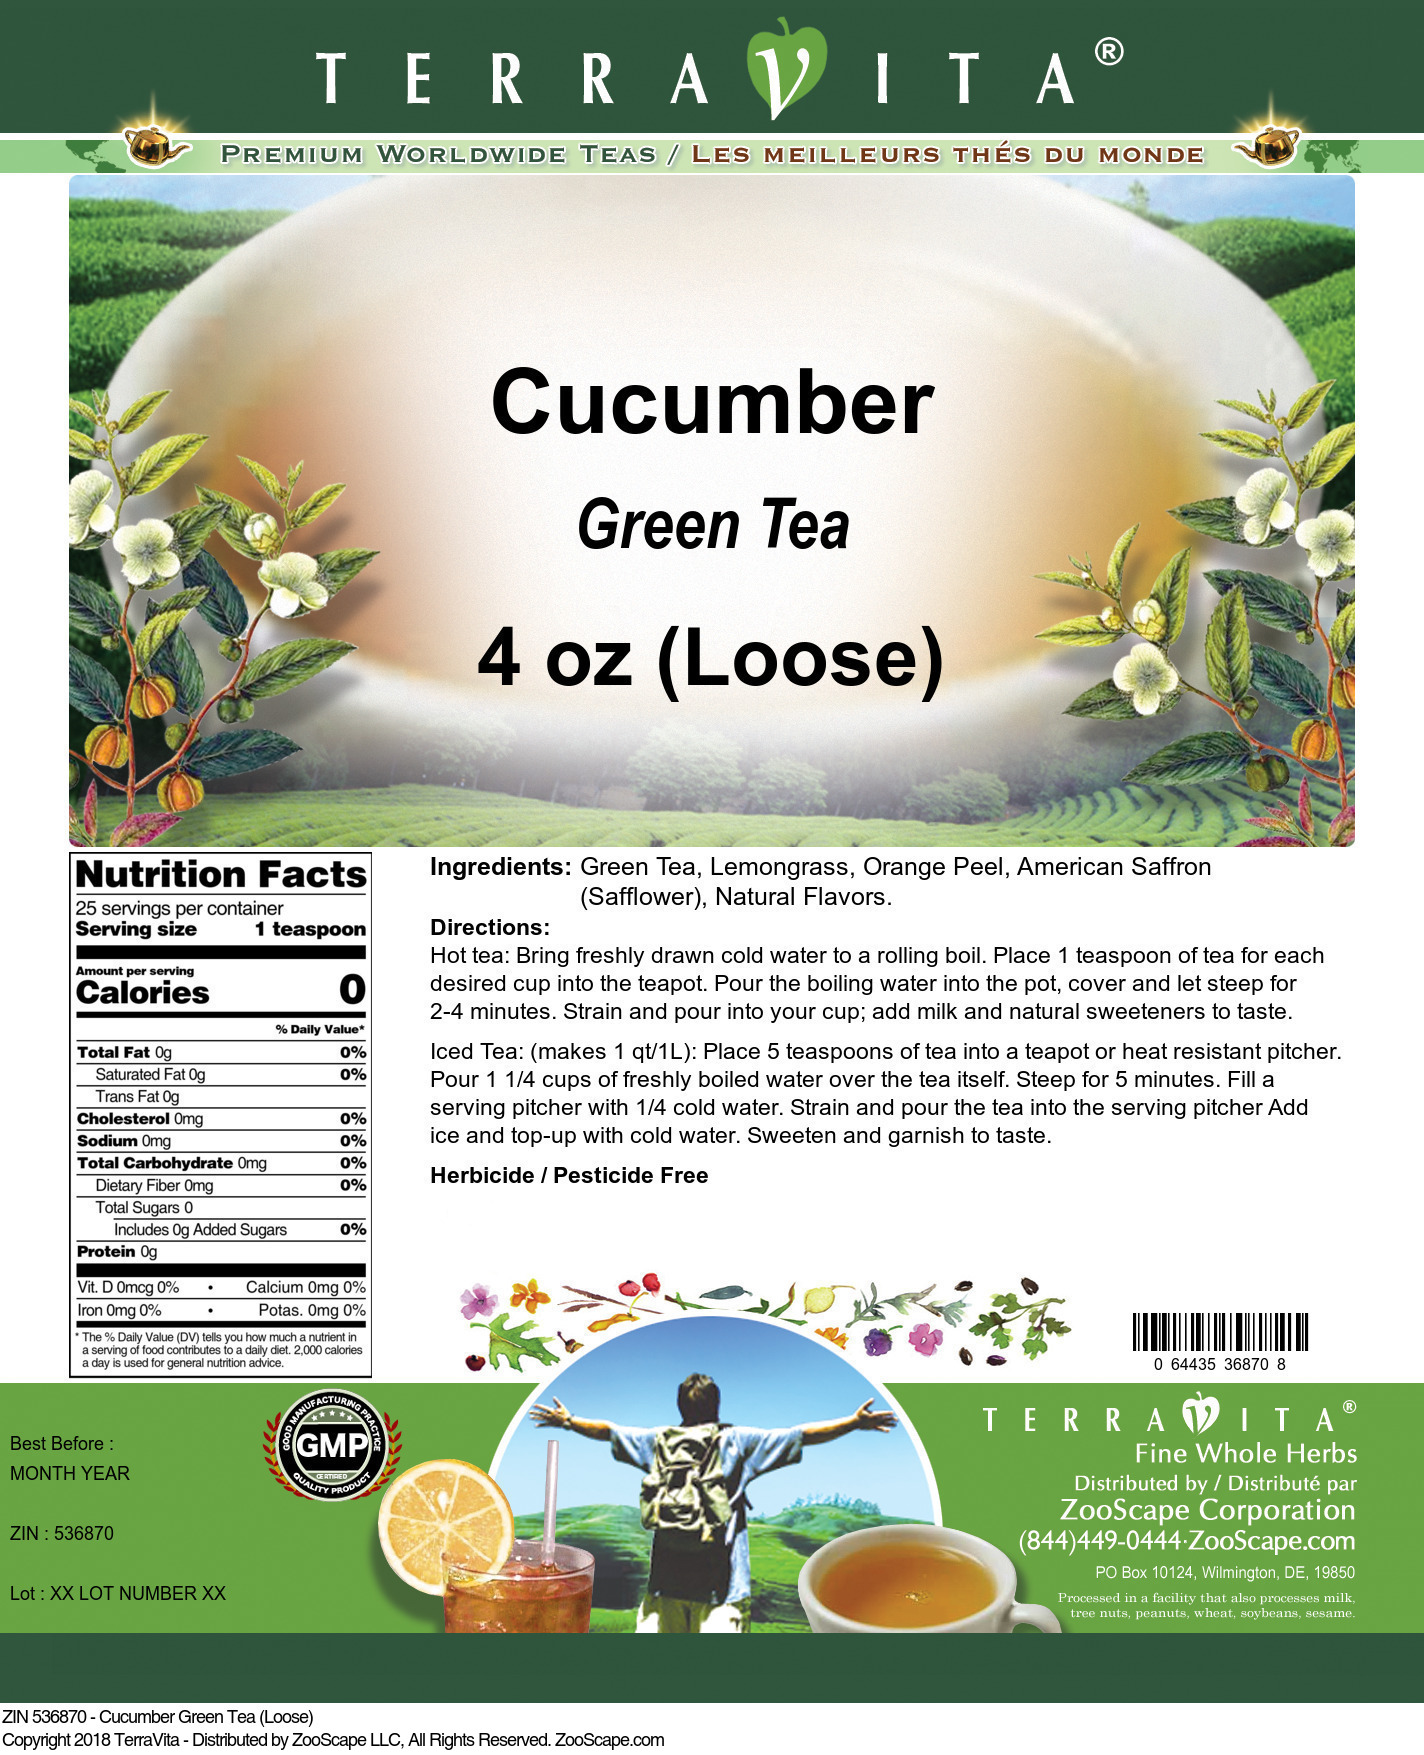 Cucumber Green Tea (Loose) - Label